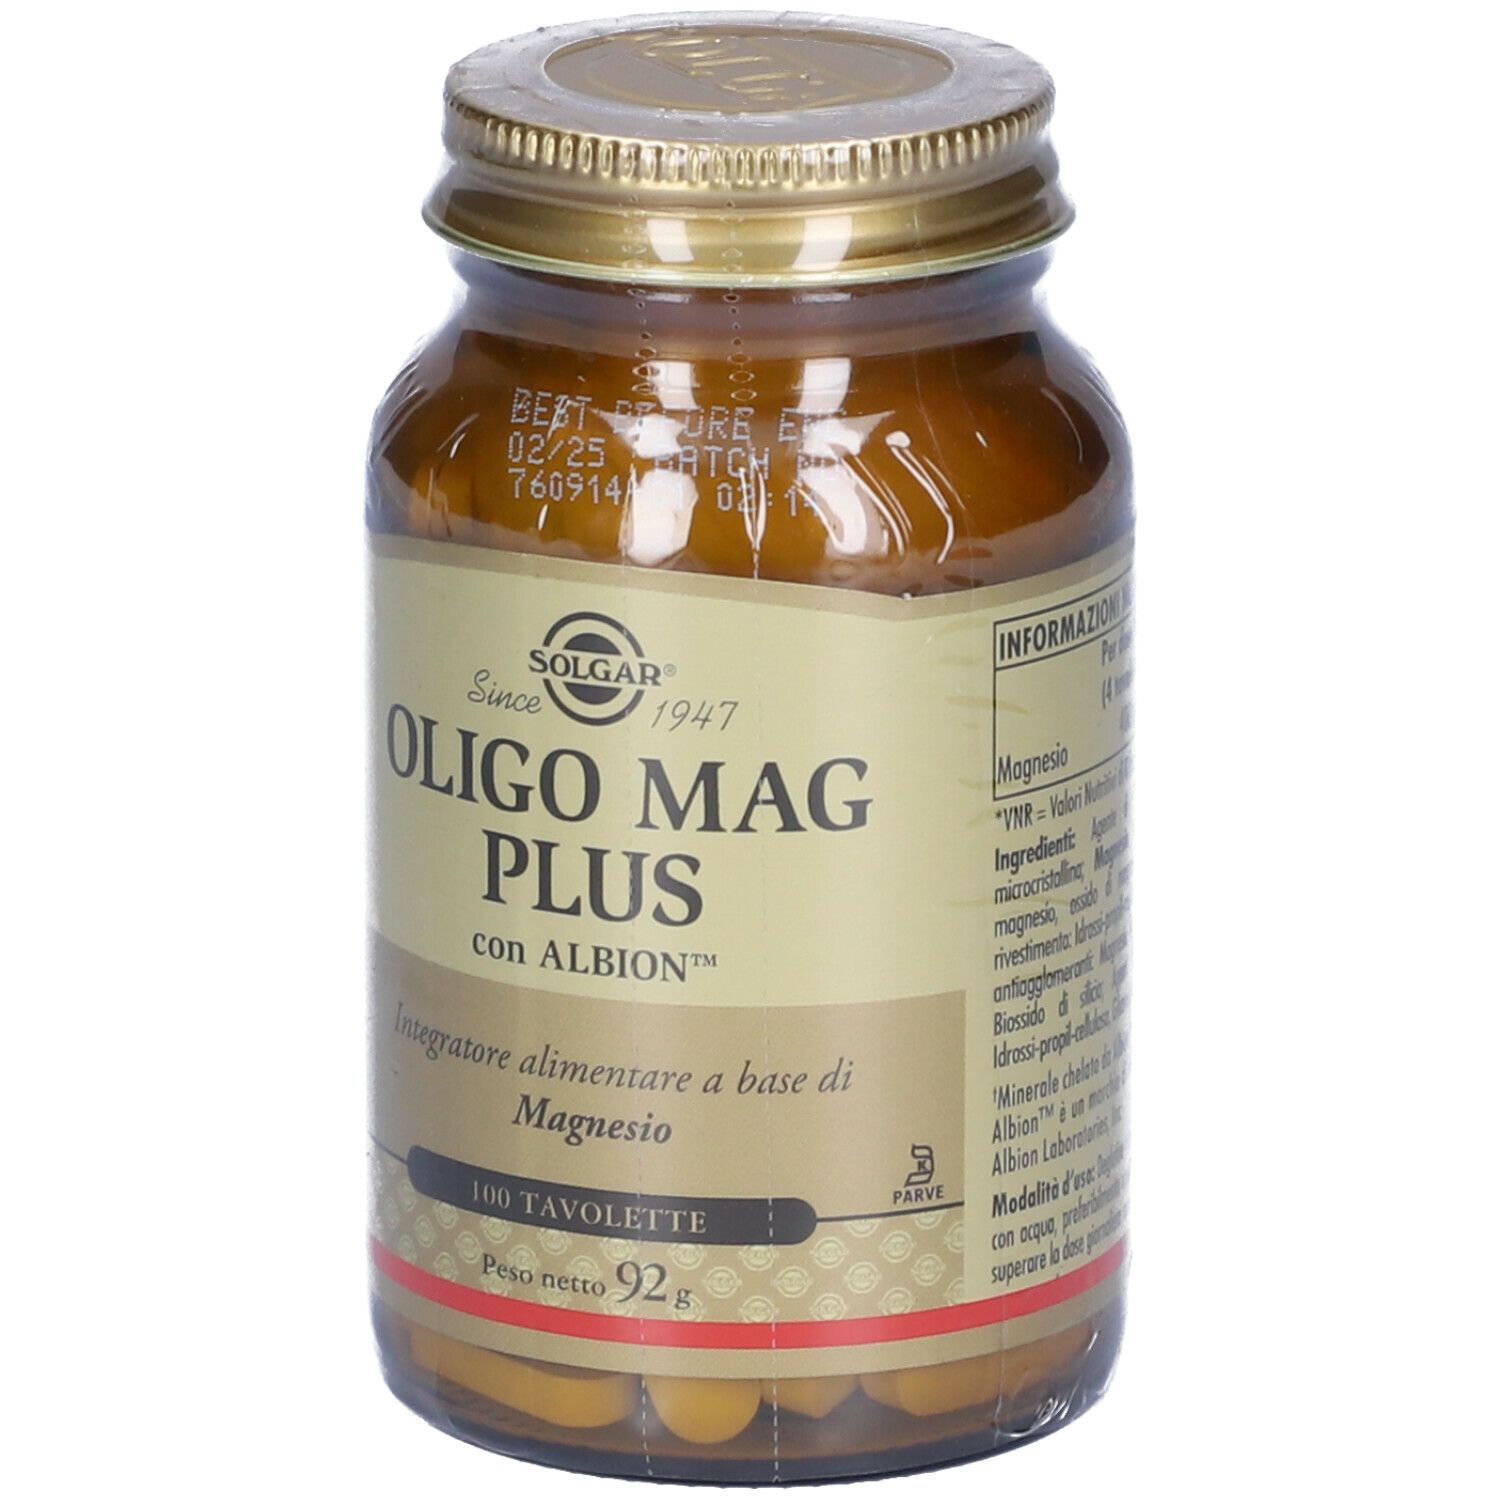 SOLGAR® Oligo Mag Plus